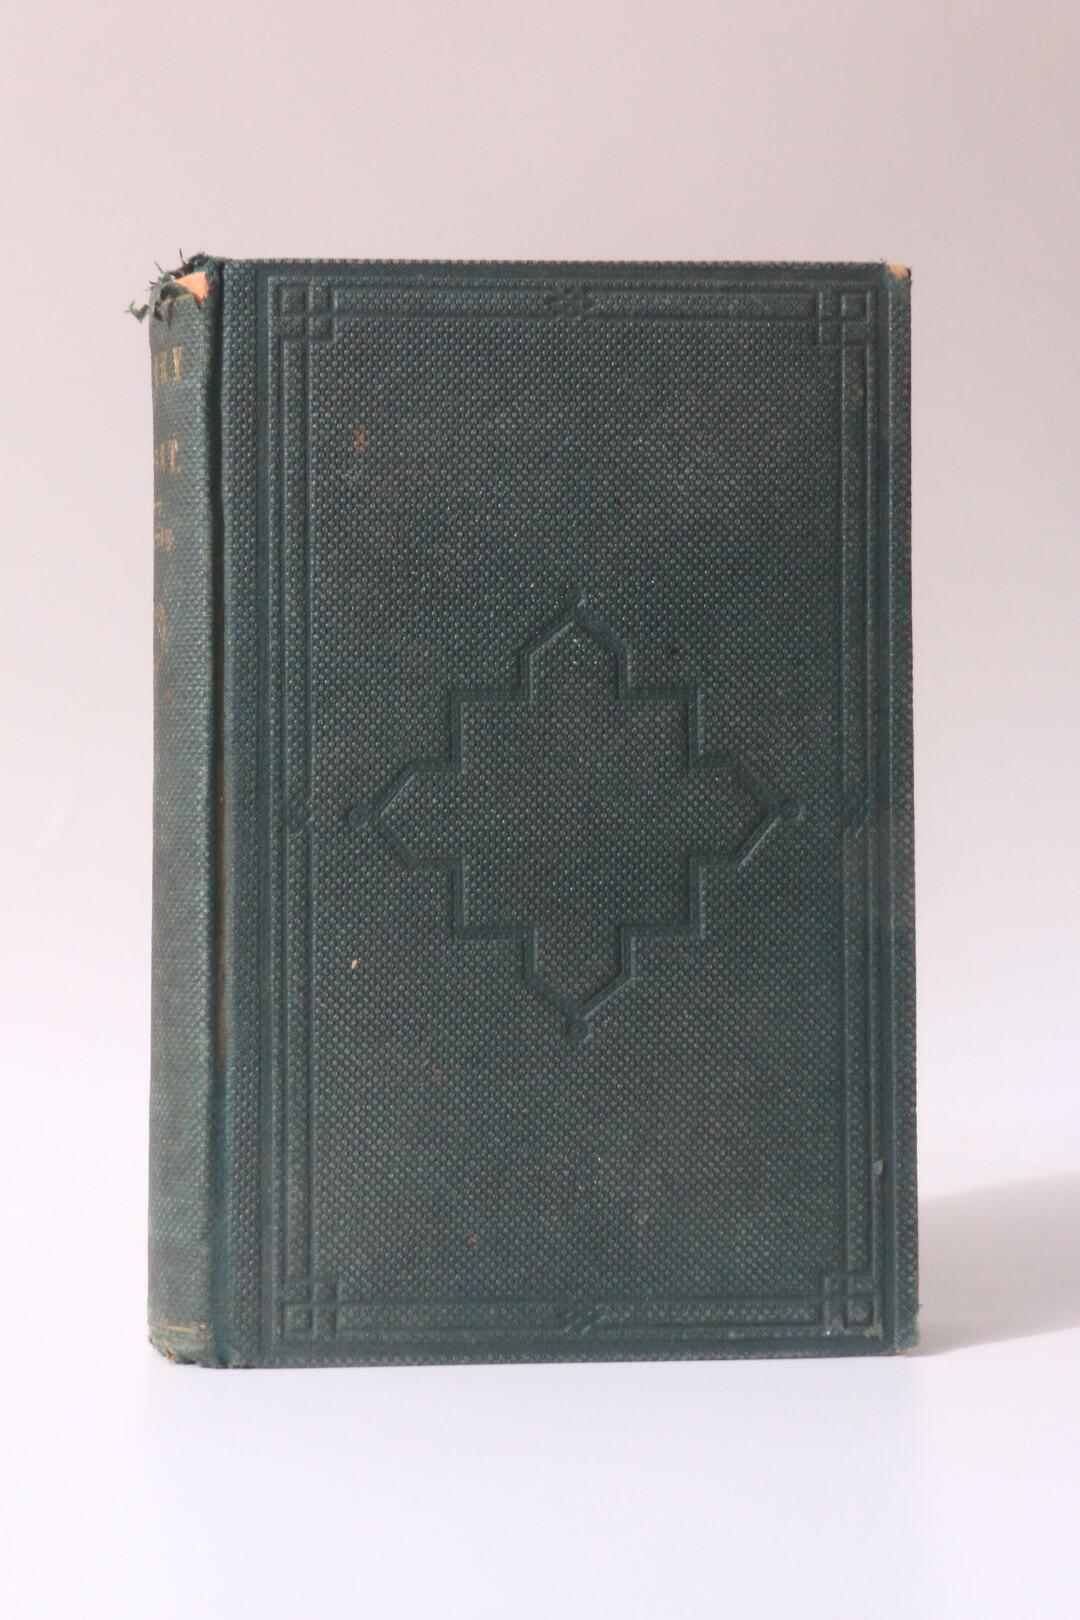 John Lothrop Motley - Merry-mount: A Romance of the Massachusetts Colony - James Monroe, 1849, First Edition.